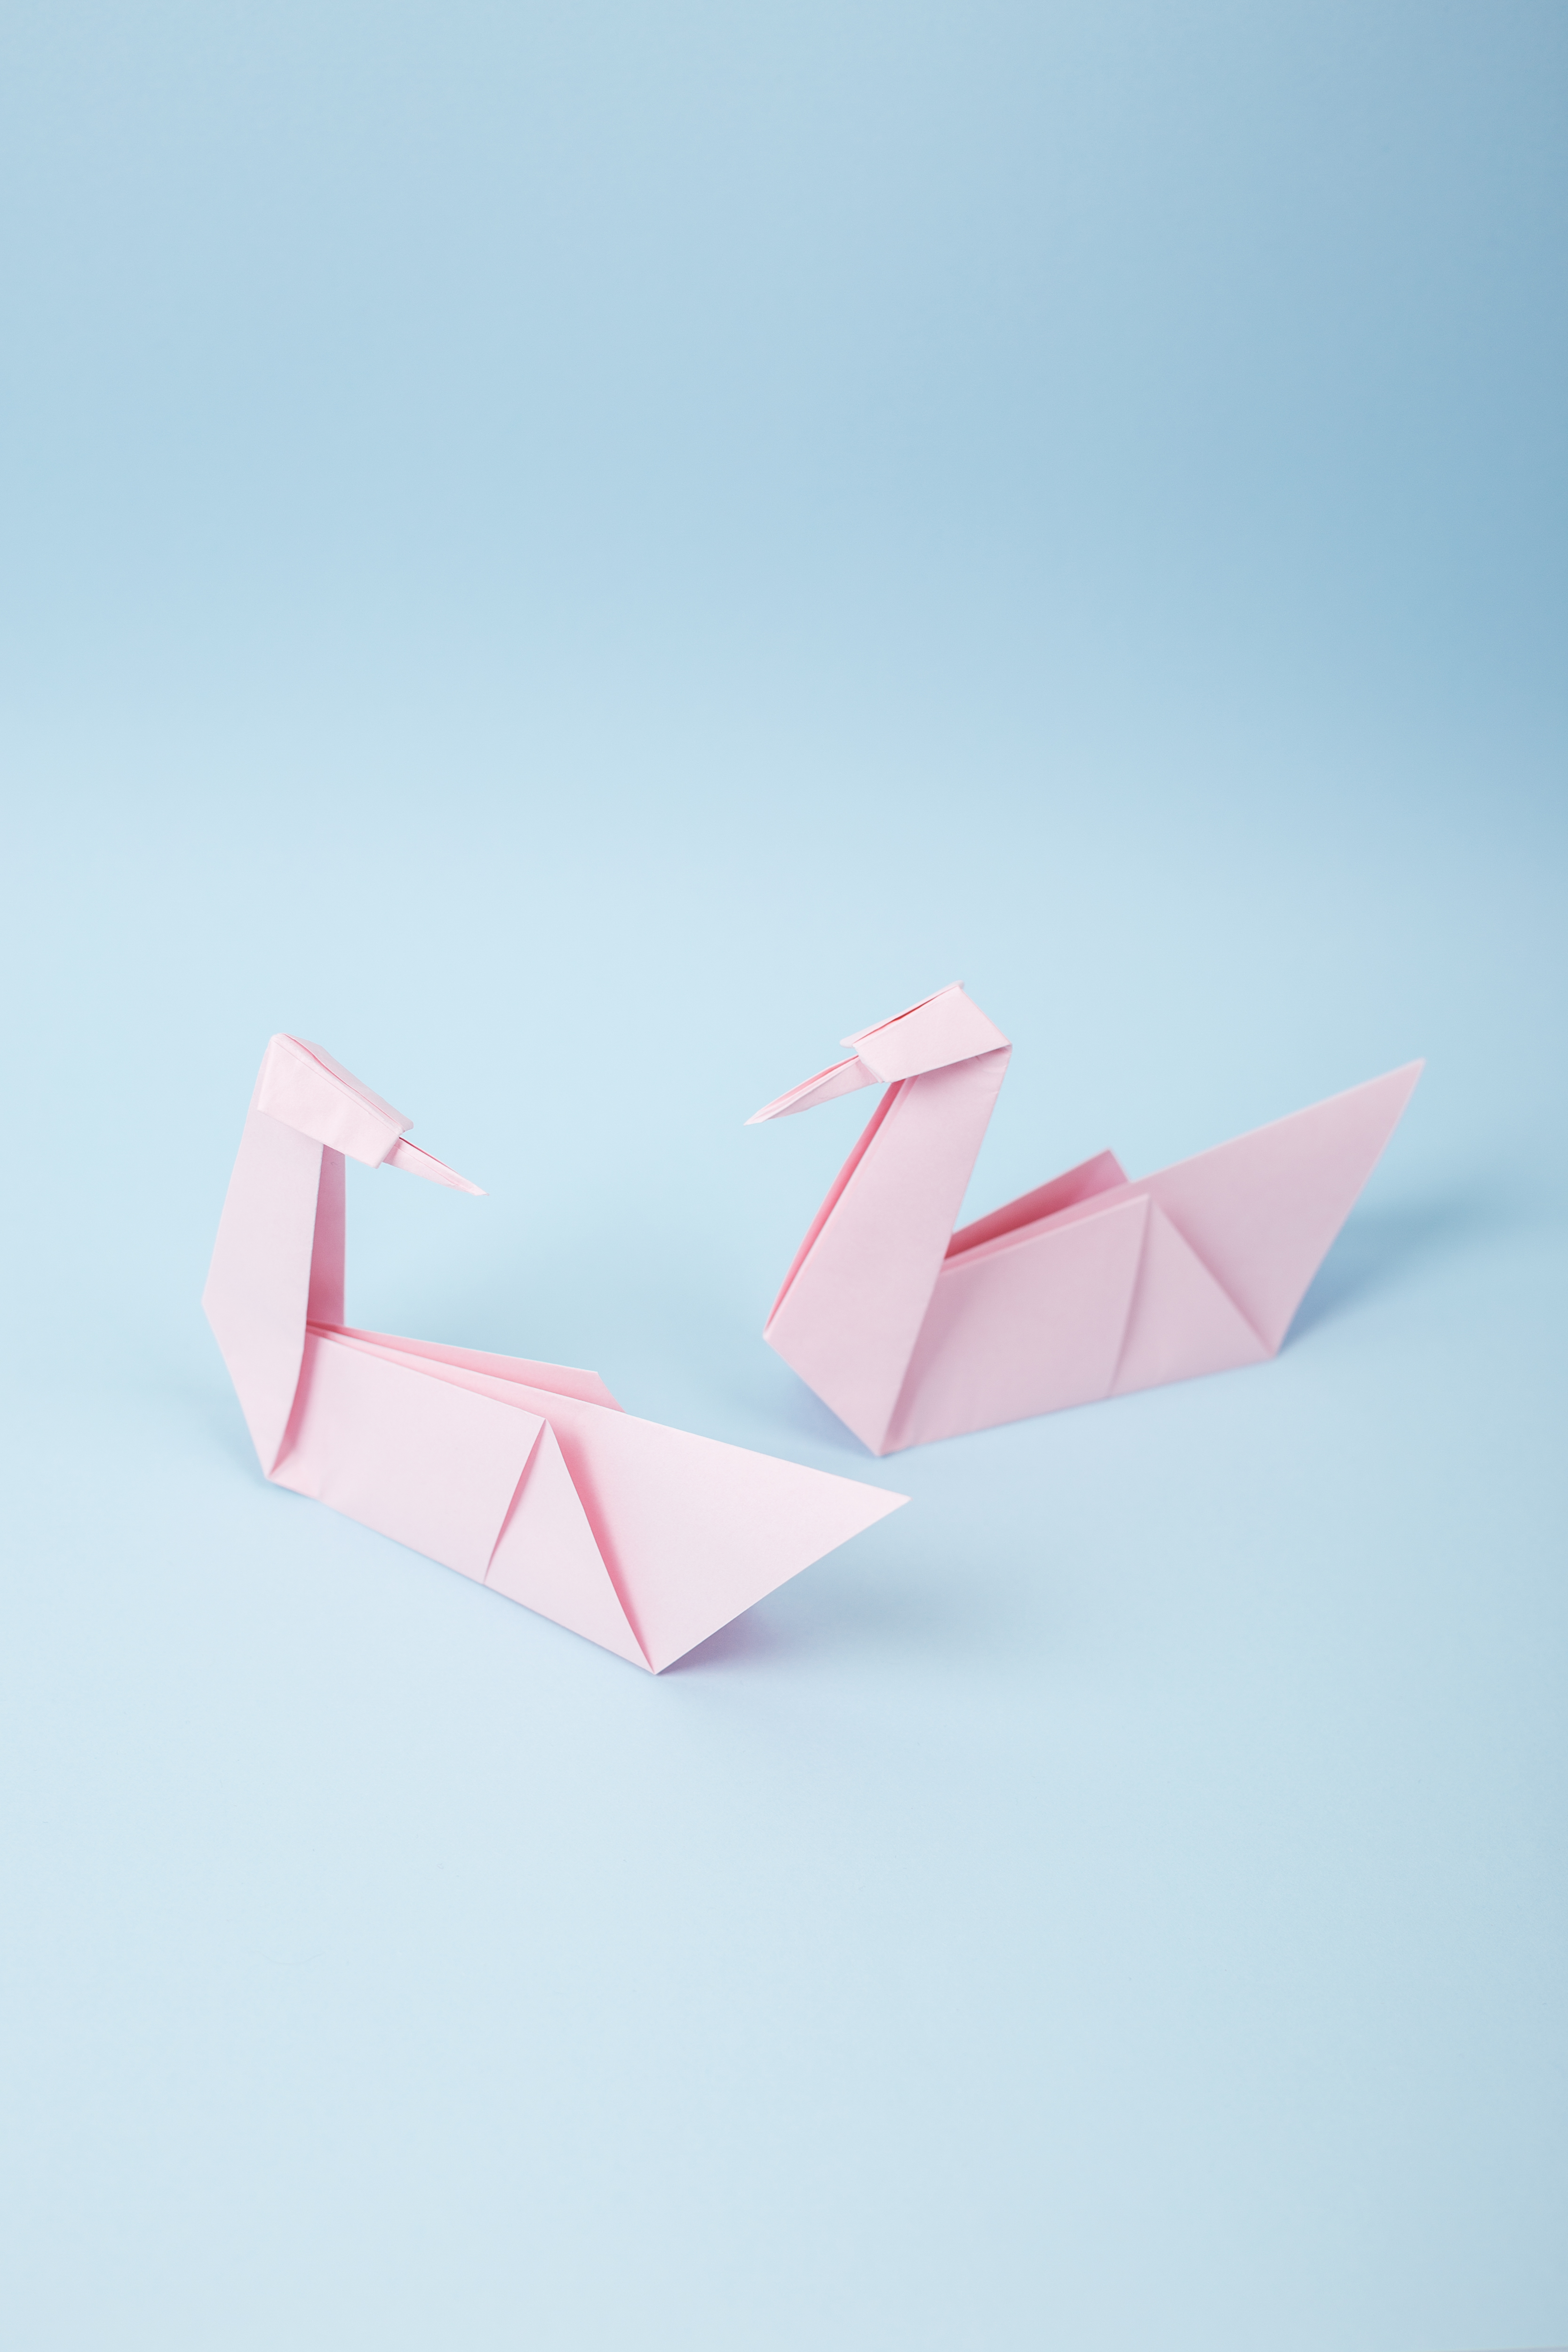 Origami Swan Basics for Paper-Folding Beginners